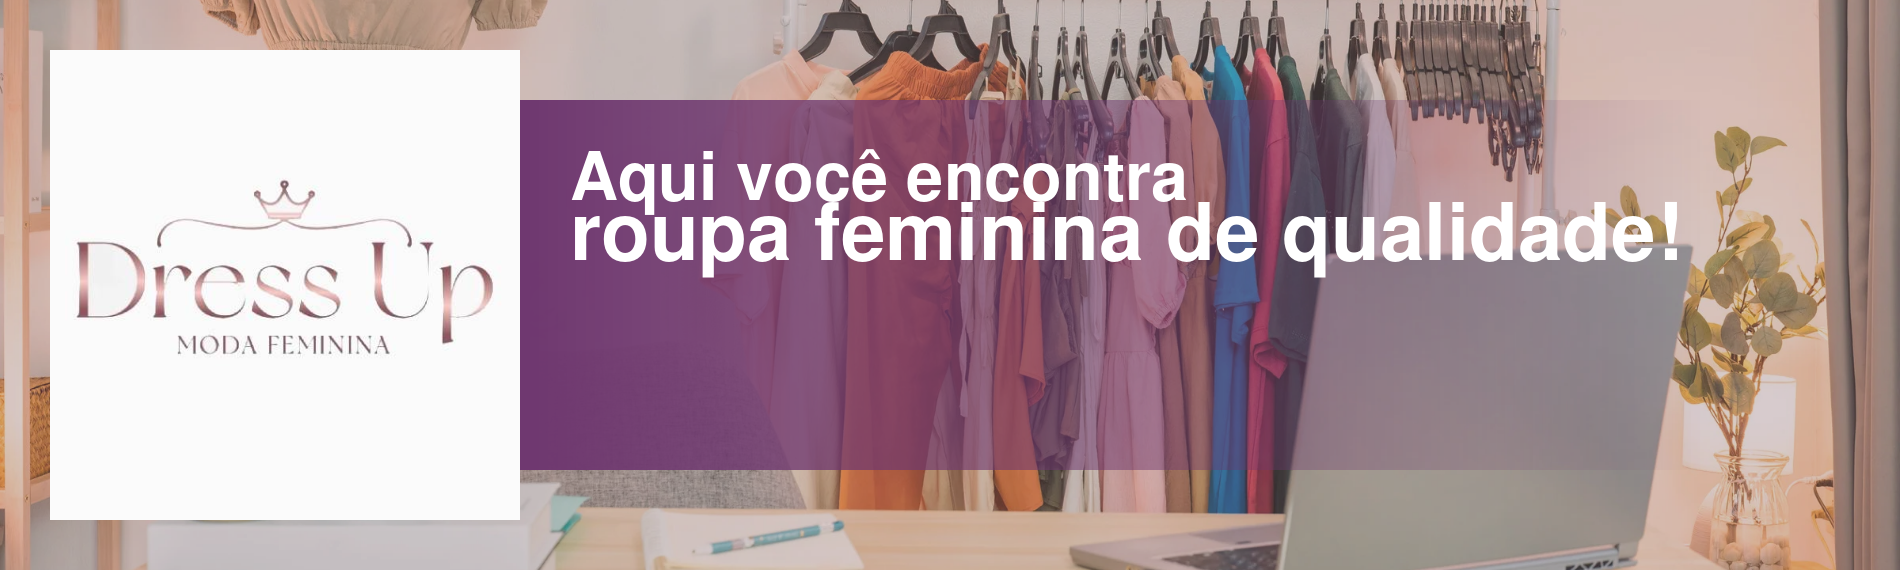 banner da empresa Dress Up Moda Feminina